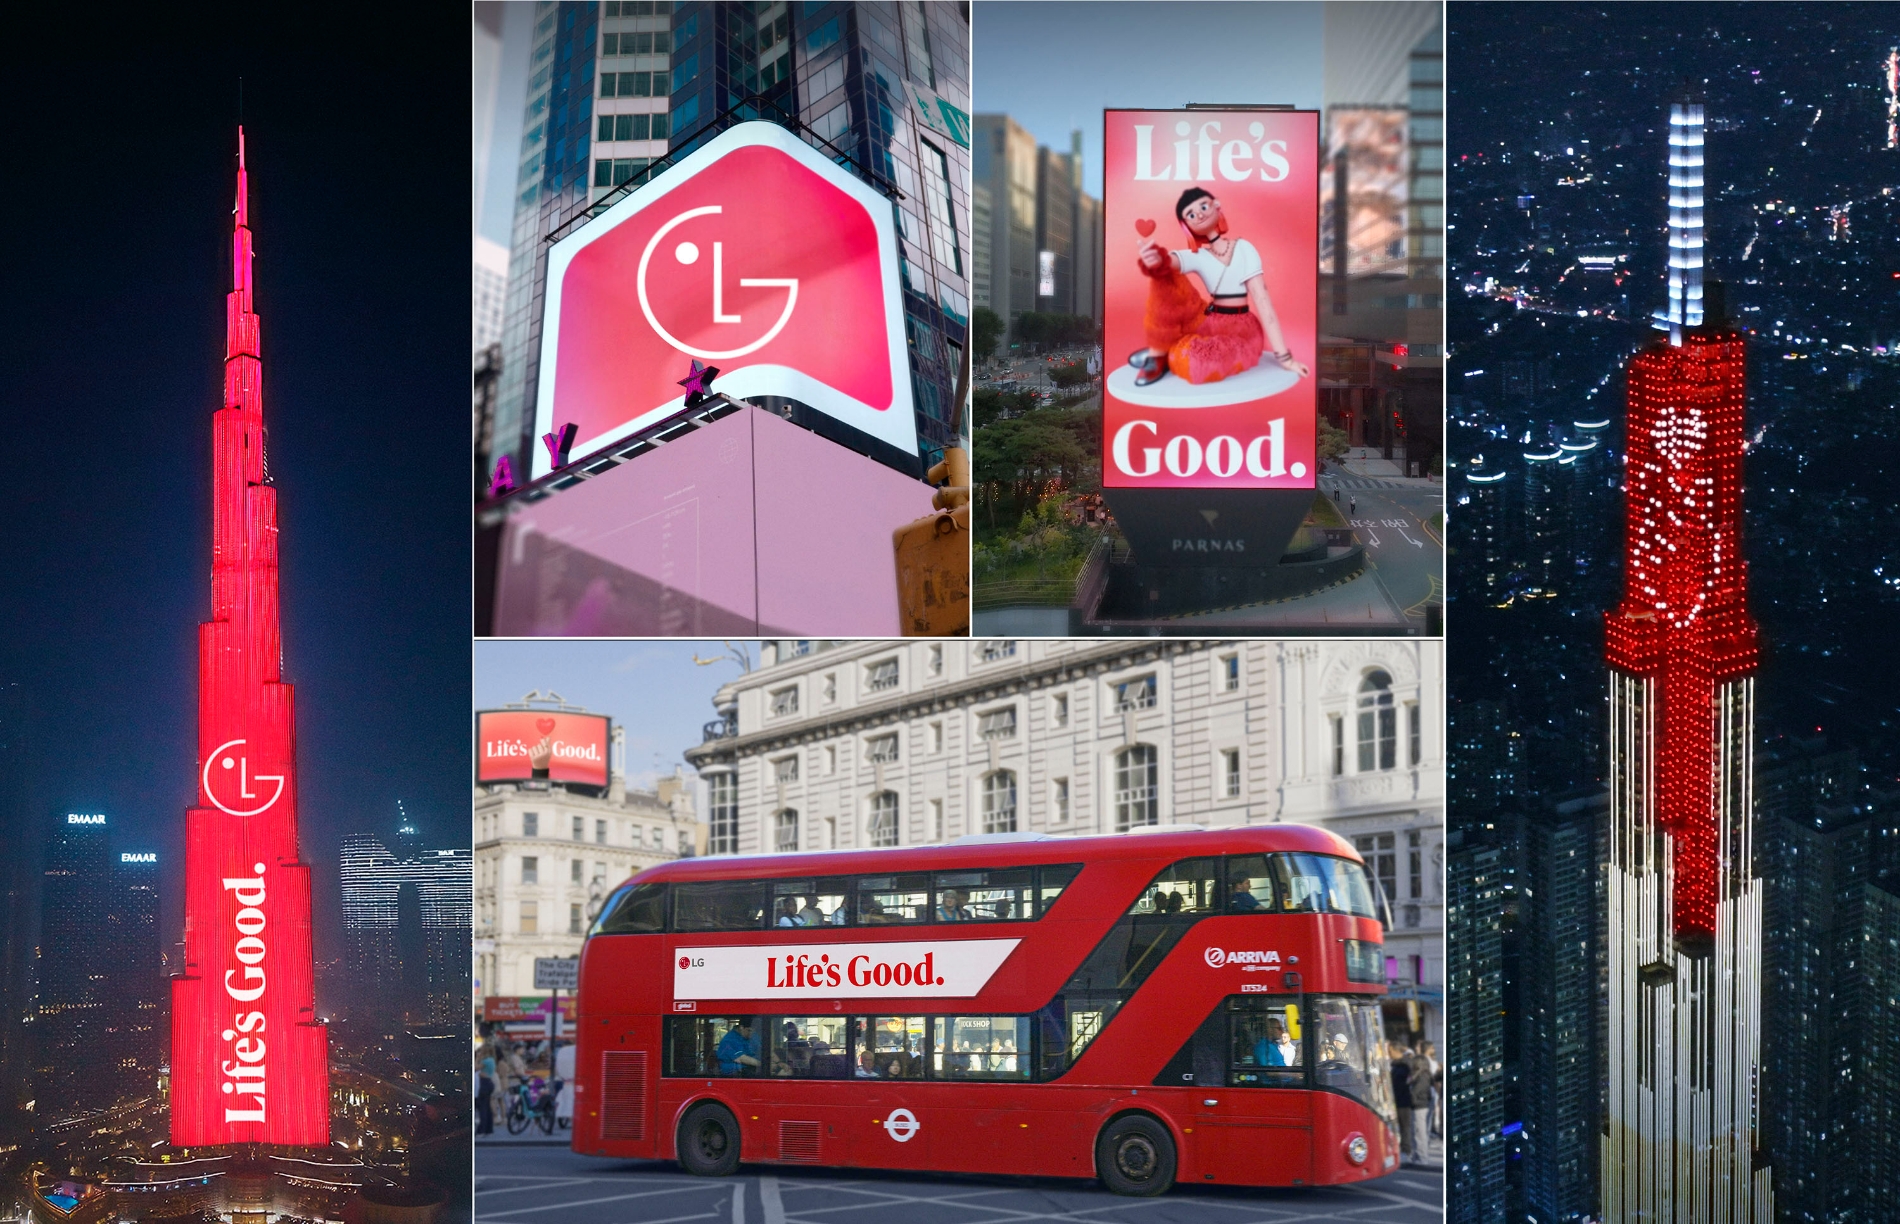 LG전자가 해외 주요 랜드마크와 국내외 주요 도시 옥외전광판에 브랜드 홍보 영상을 선보이며 '라이프스굿(Life's Good)' 글로벌 브랜드 캠페인을 시작했다. 사진은(왼쪽부터 시계방향)은 두바이 부르즈 할리파, 뉴욕 타임스스퀘어 옥외전광판, 서울 파르나스 미디어 타워, 호치민 랜드마크81, 런던 피카딜리 광장과 빨간 2층 버스에서 신규 비주얼 아이덴티티가 적용된 브랜드 홍보 영상, 슬로건을 노출되고 있는 모습./사진제공=LG전자